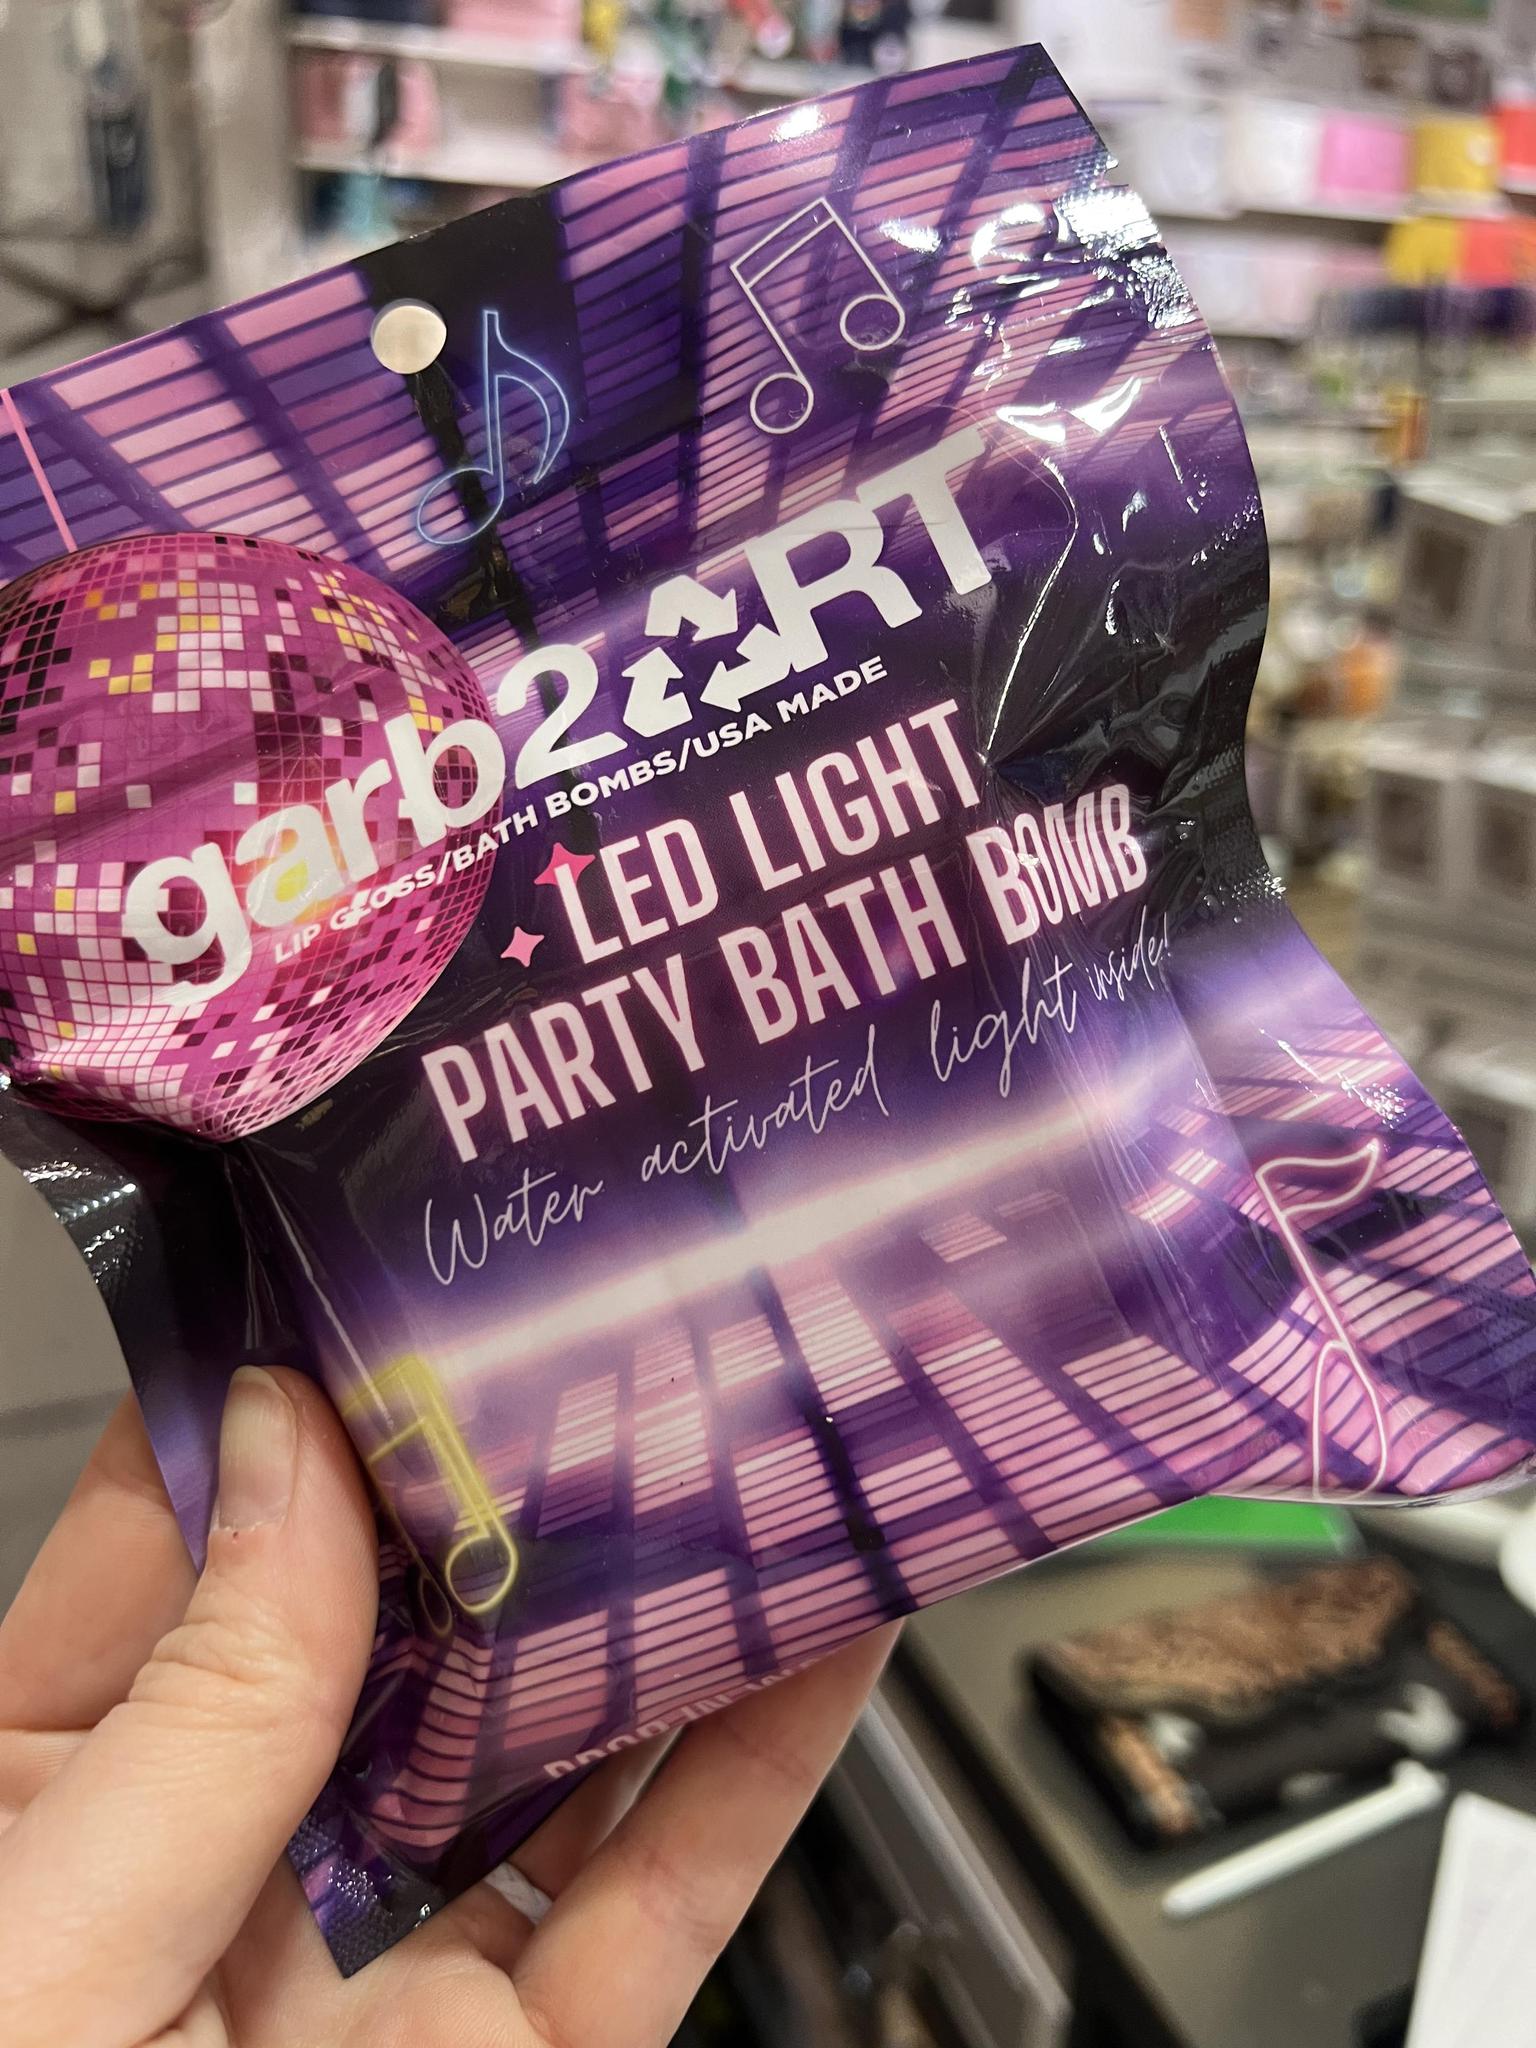 LED Light Party Bath Bomb